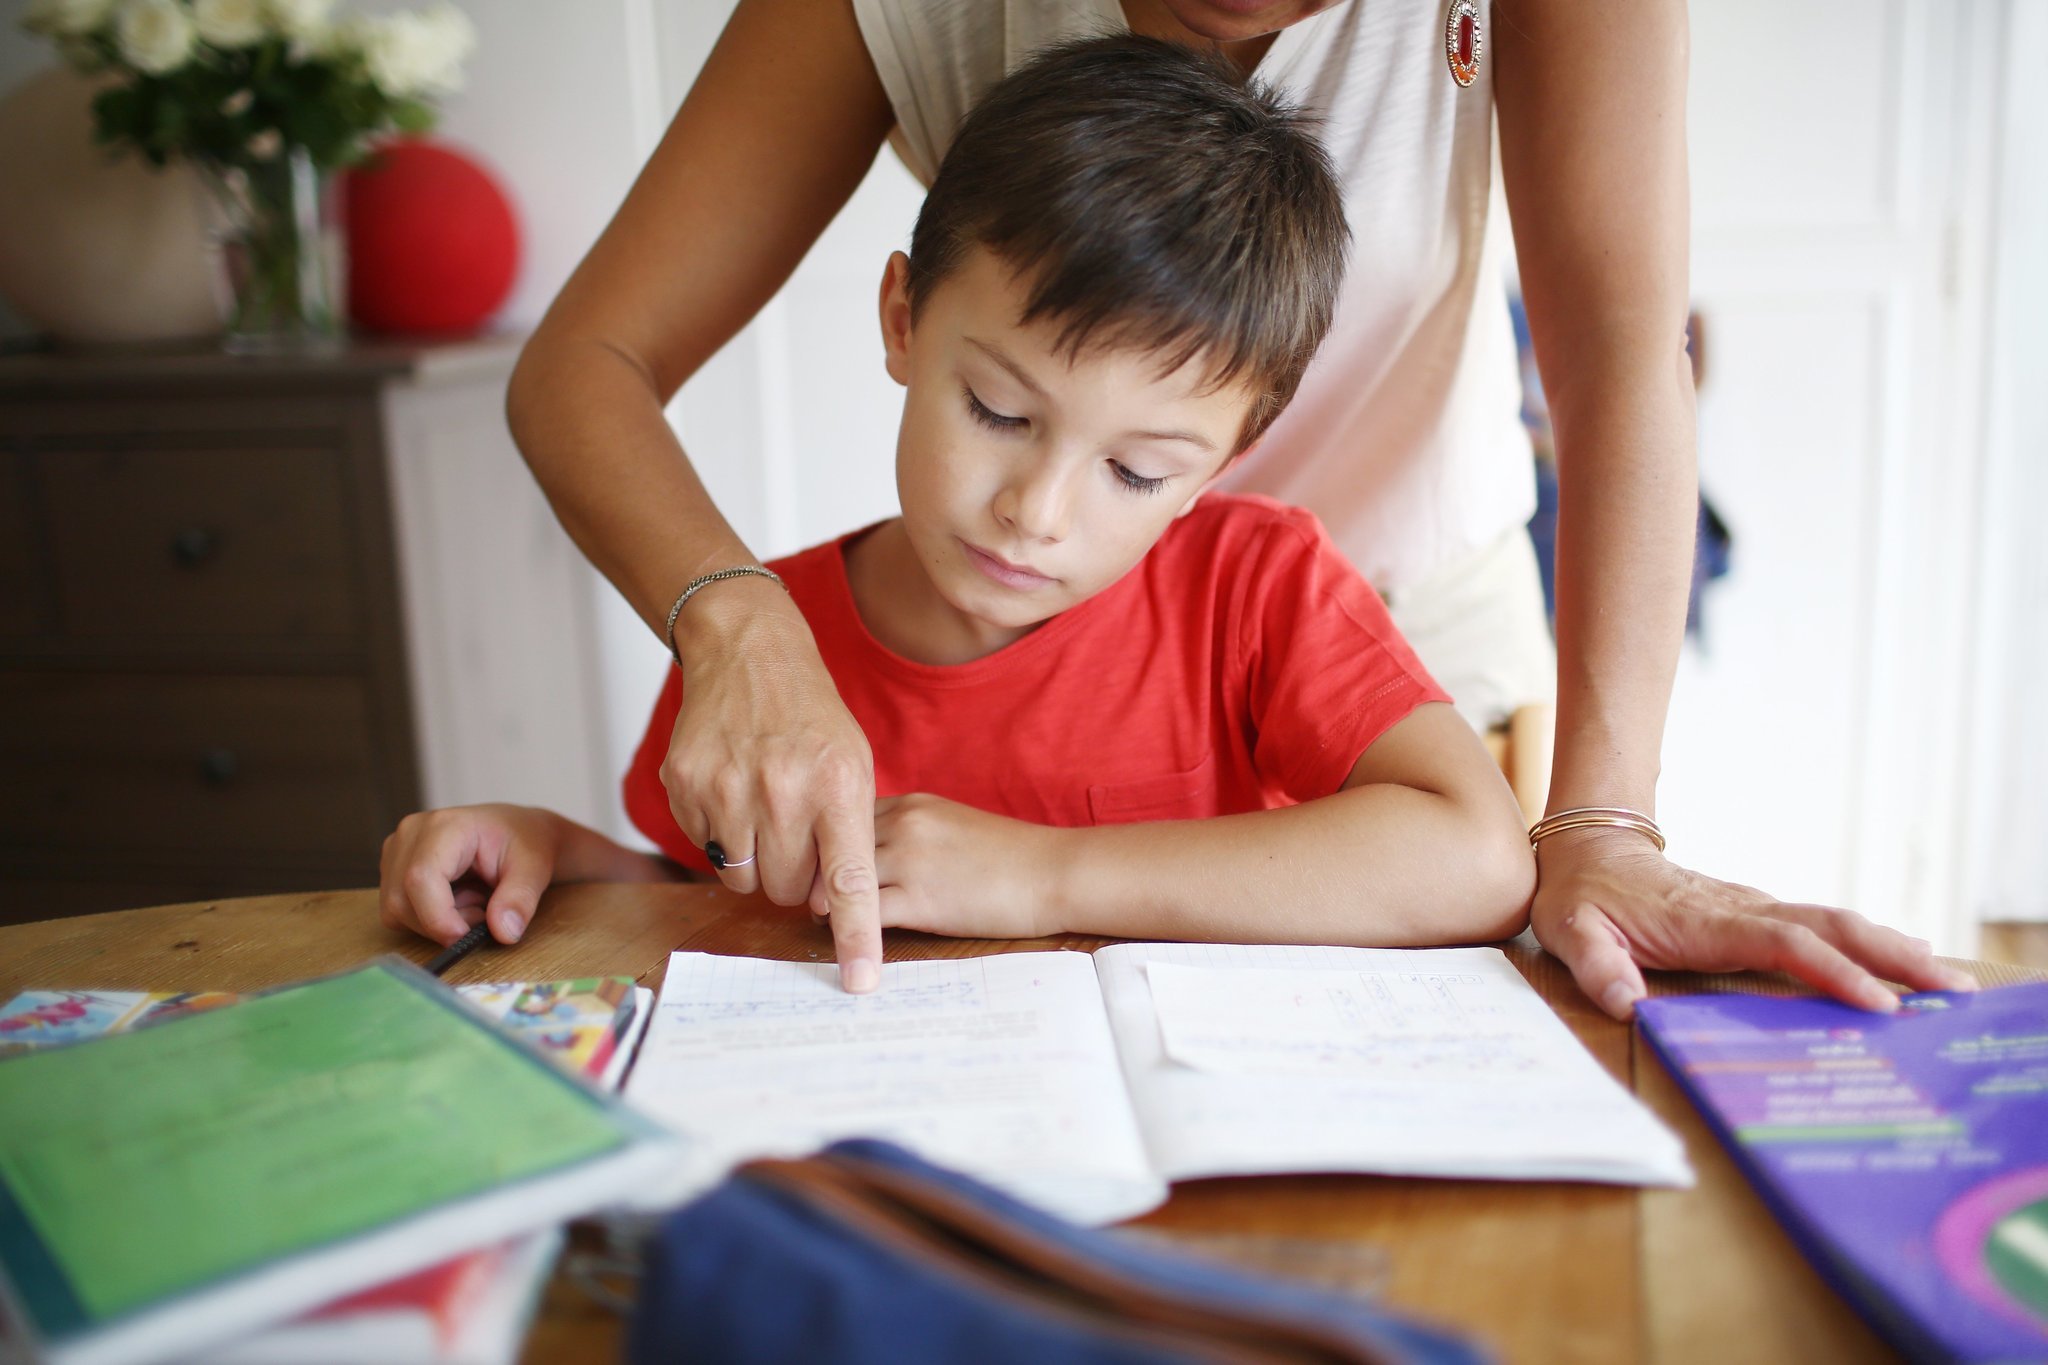 Do kids do better with homework